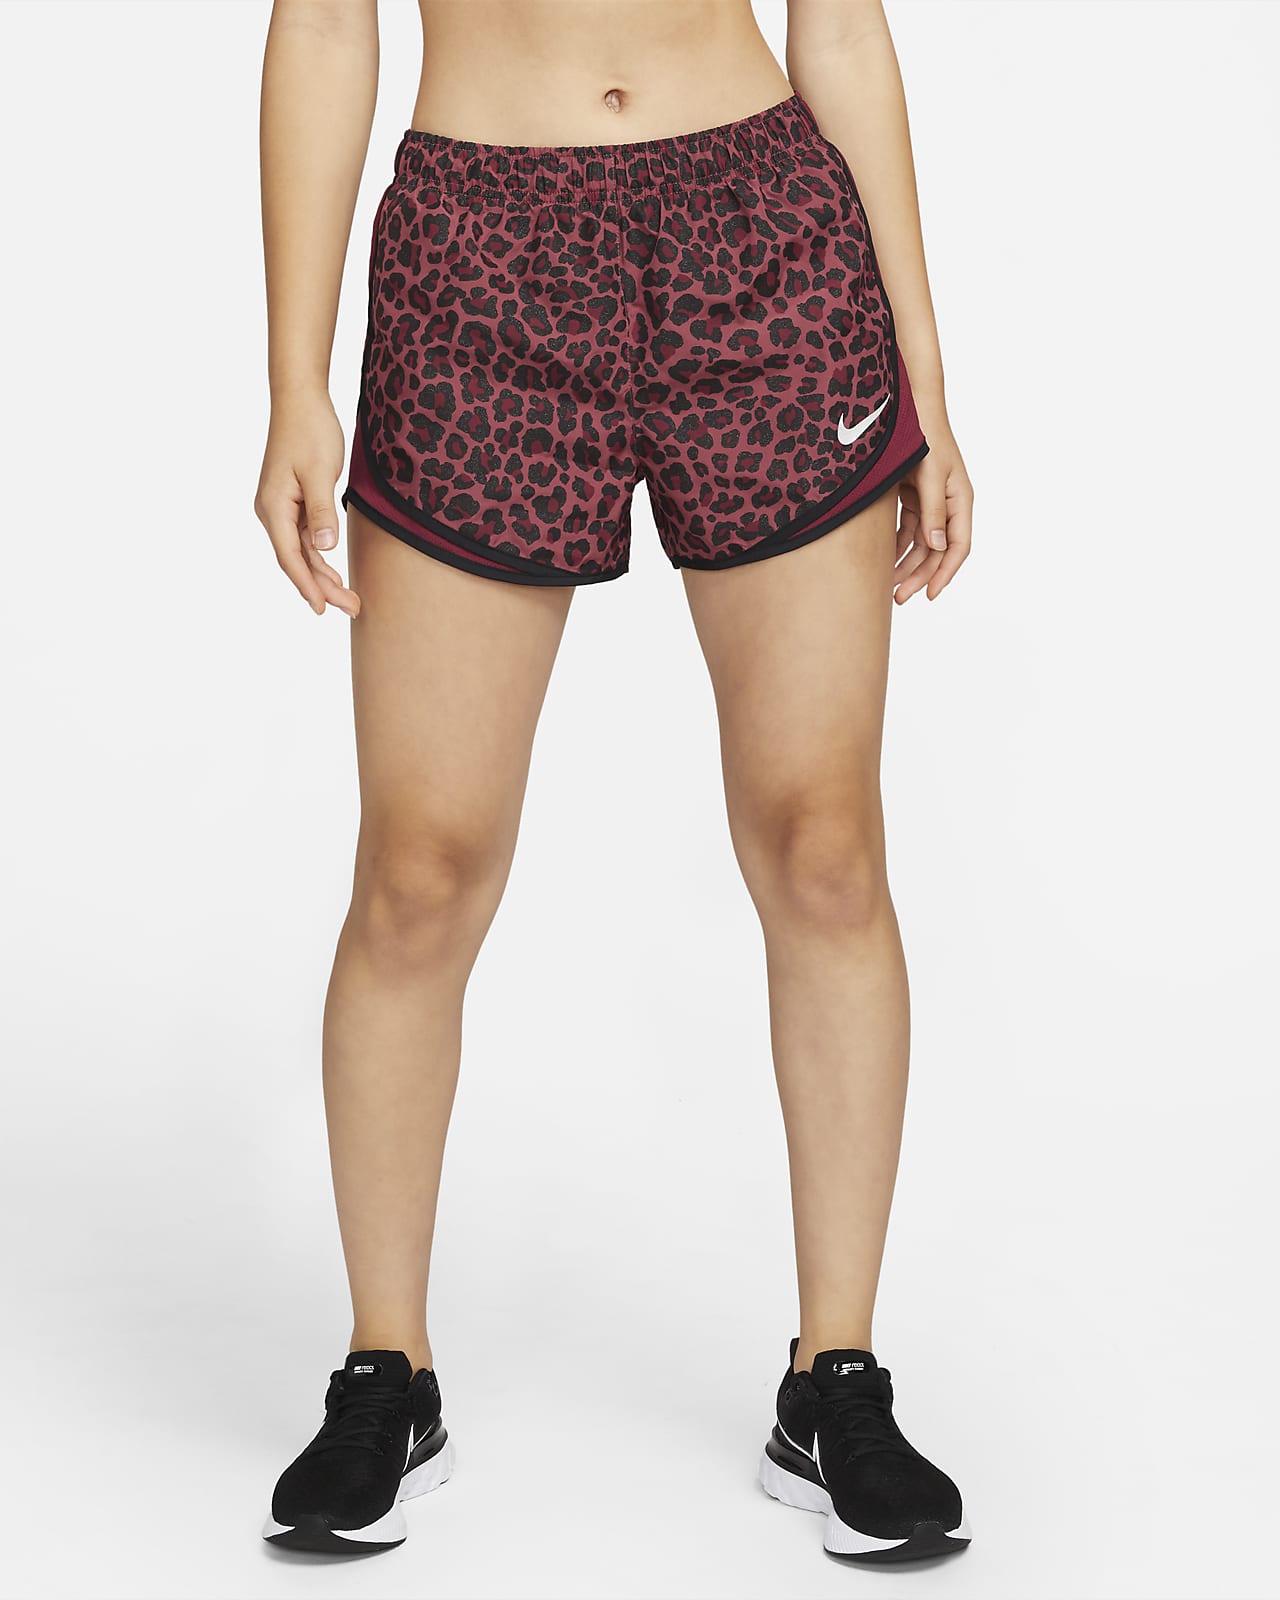 nike leopard print shorts, Off 69% ,